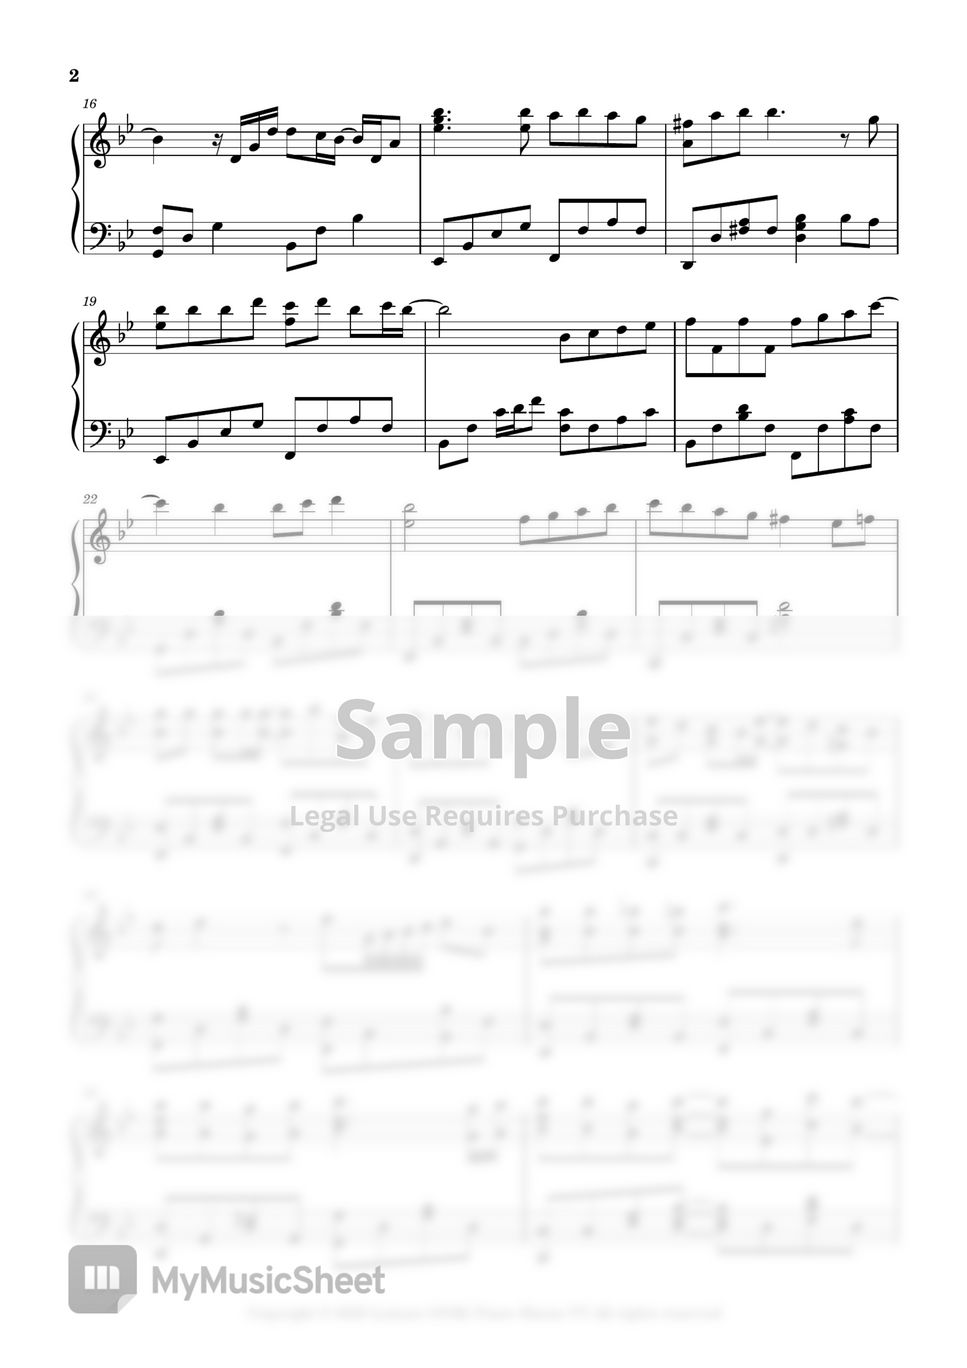 Uru - 星の中の君 (夏美のホタル 主題歌) by Leisure (OOR) Piano Sheets YT